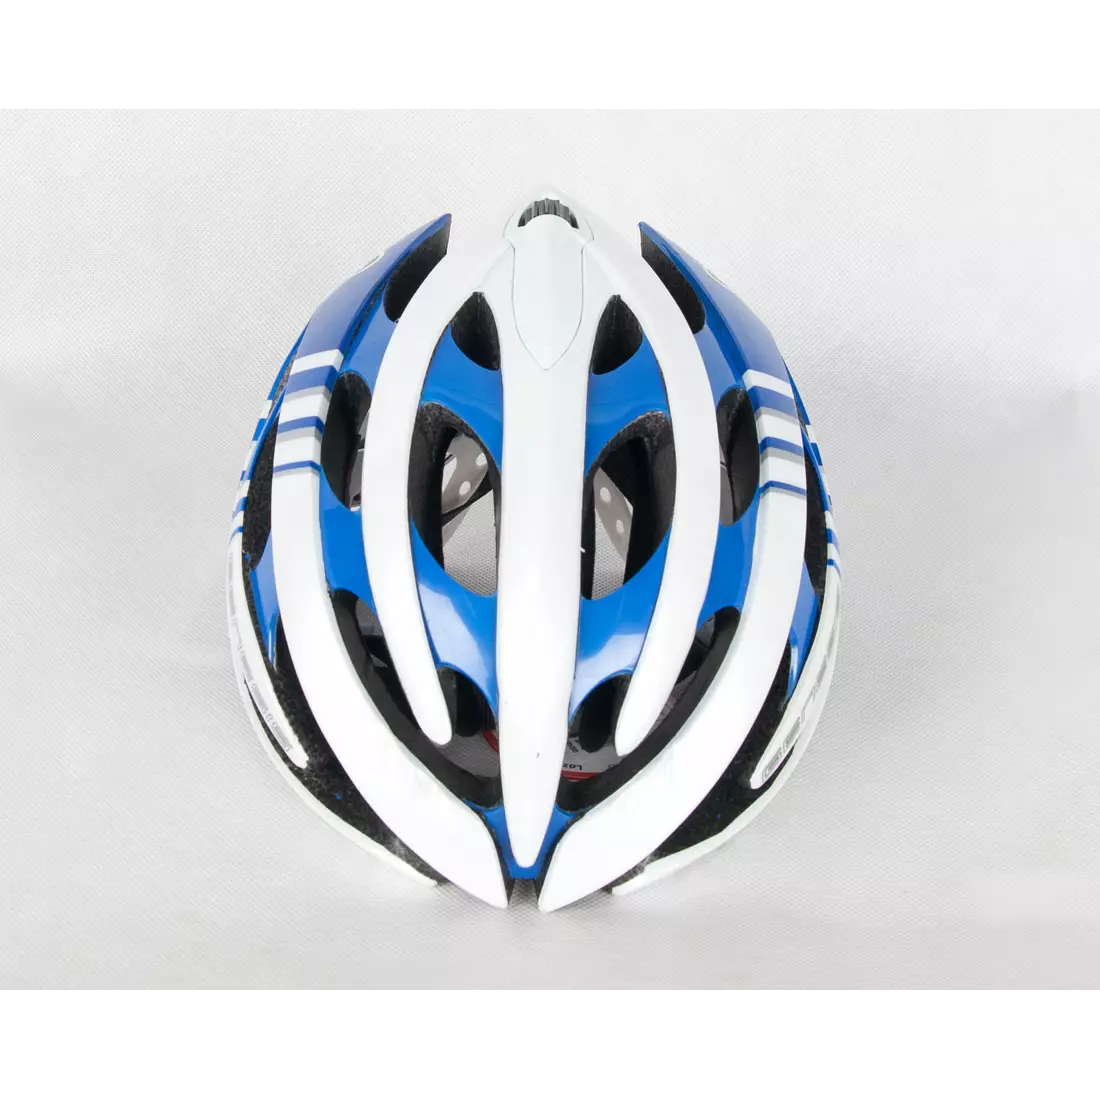 Casca de bicicleta LAZER GENESIS, drum, albastru si alb